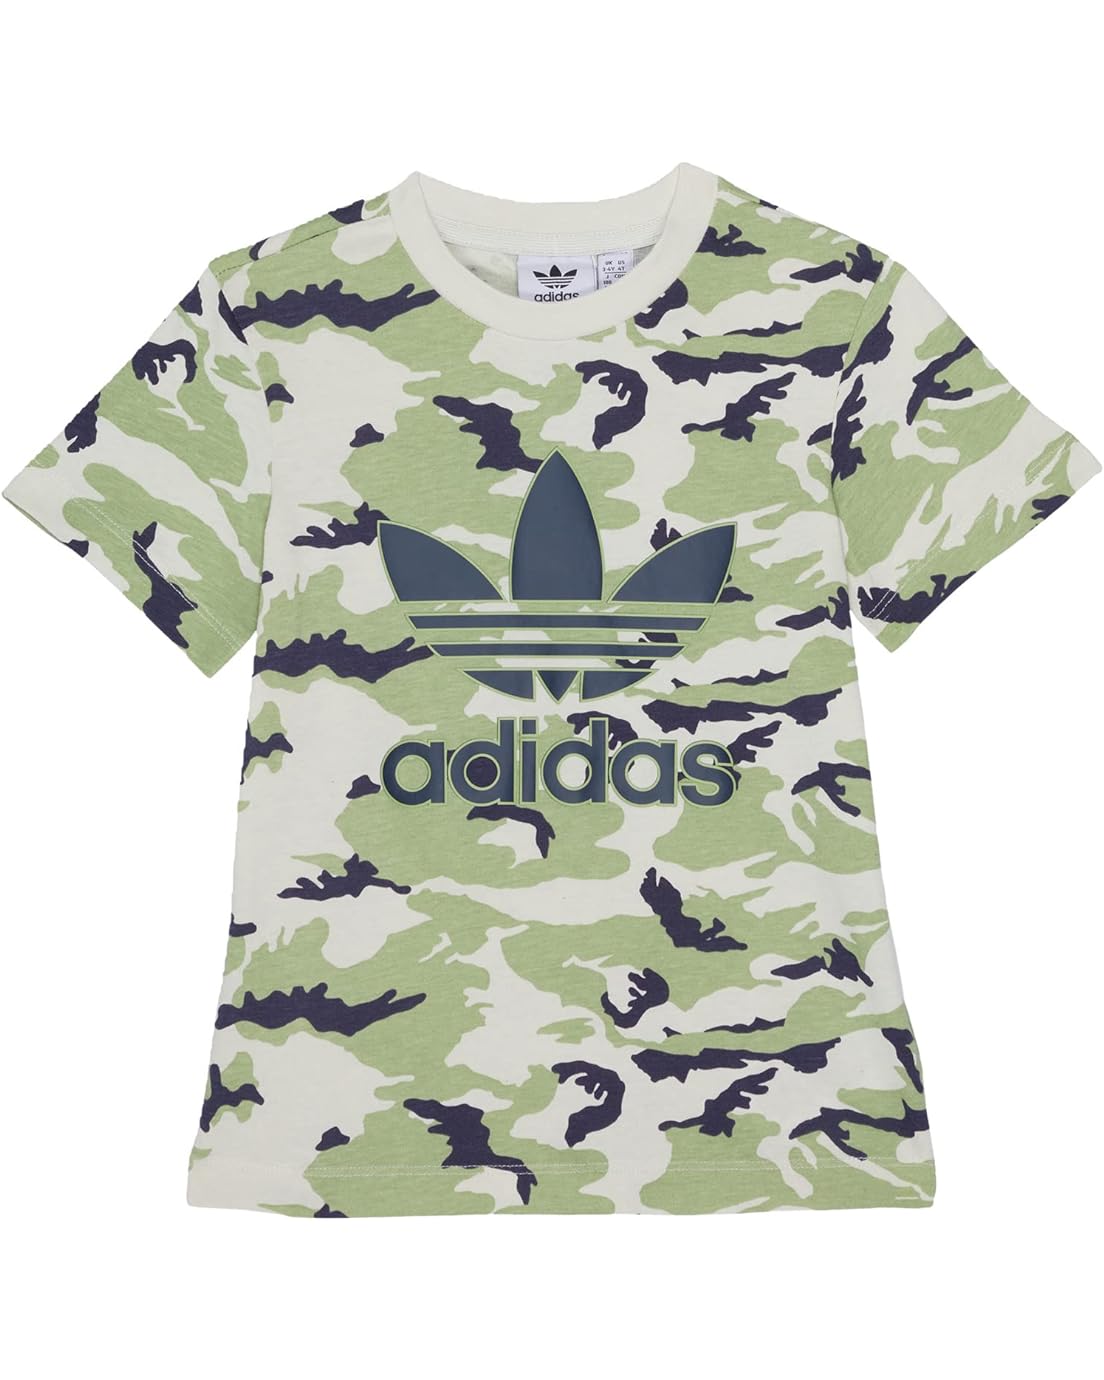 adidas Originals Kids Camouflage Tee (Infantu002FToddler)